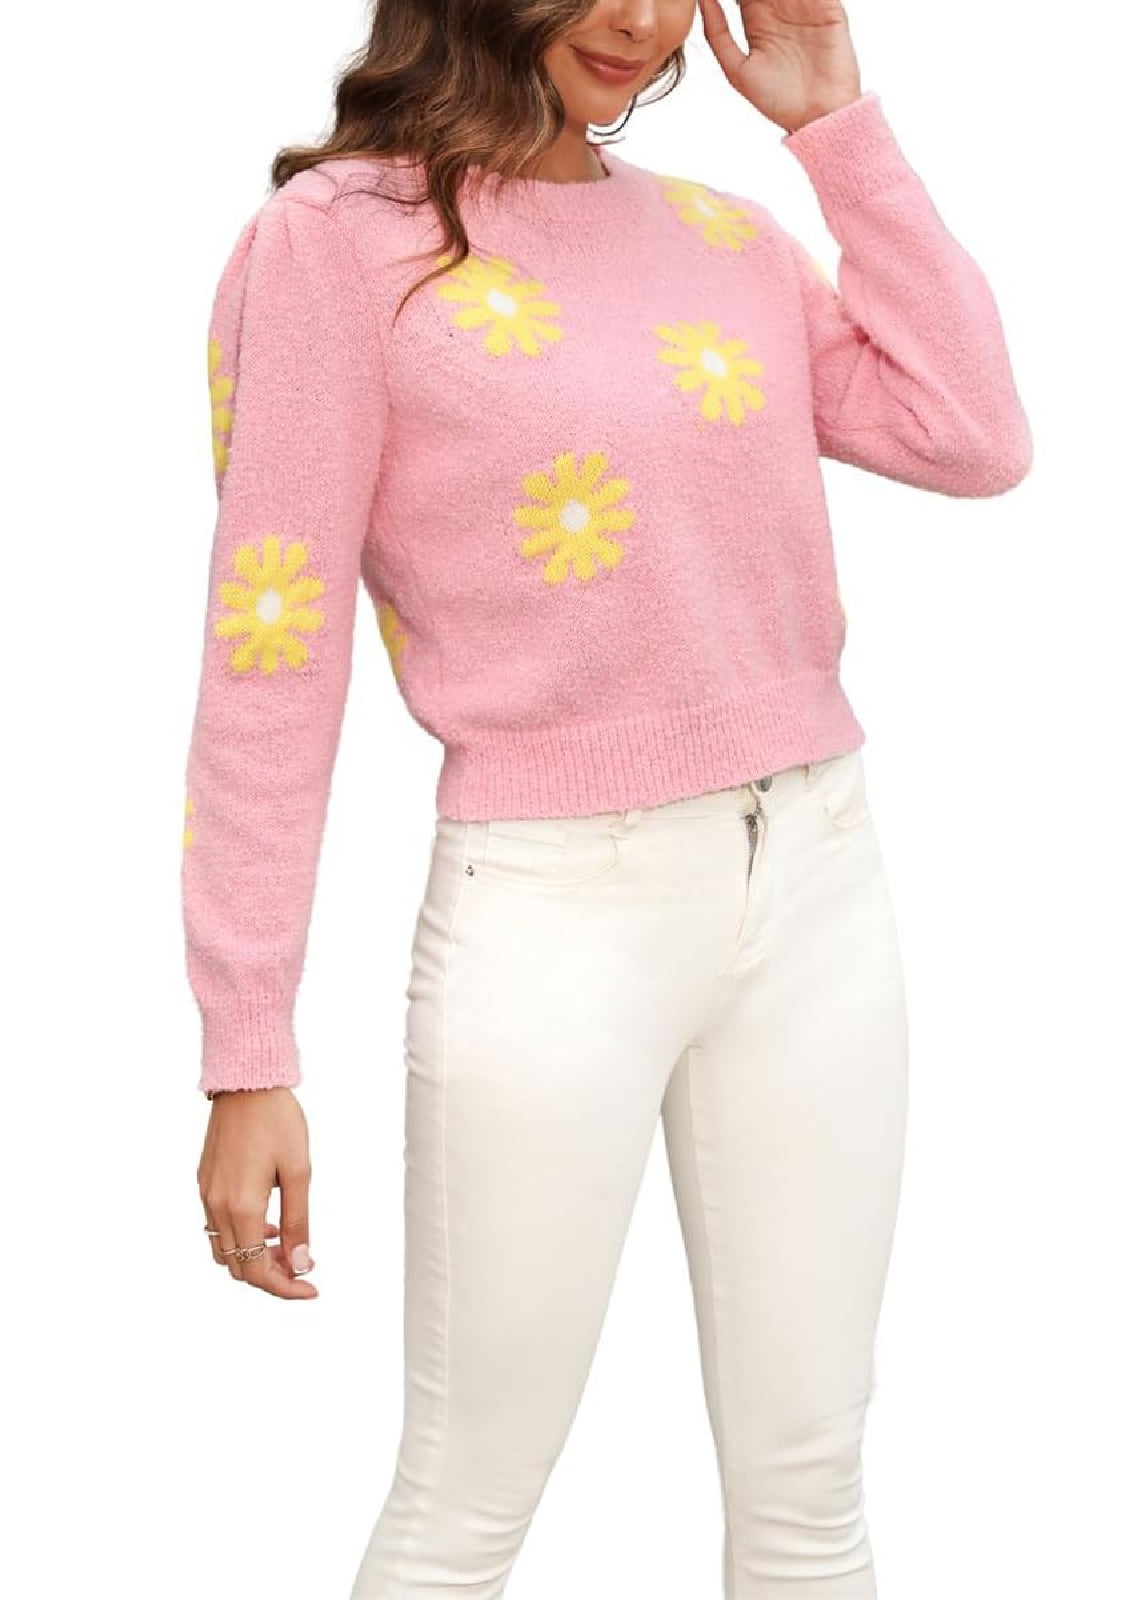 WSPLYSPJY Women's Fuzzy Crewneck Cropped Sweater Cute Daisy Long Sleeve ...